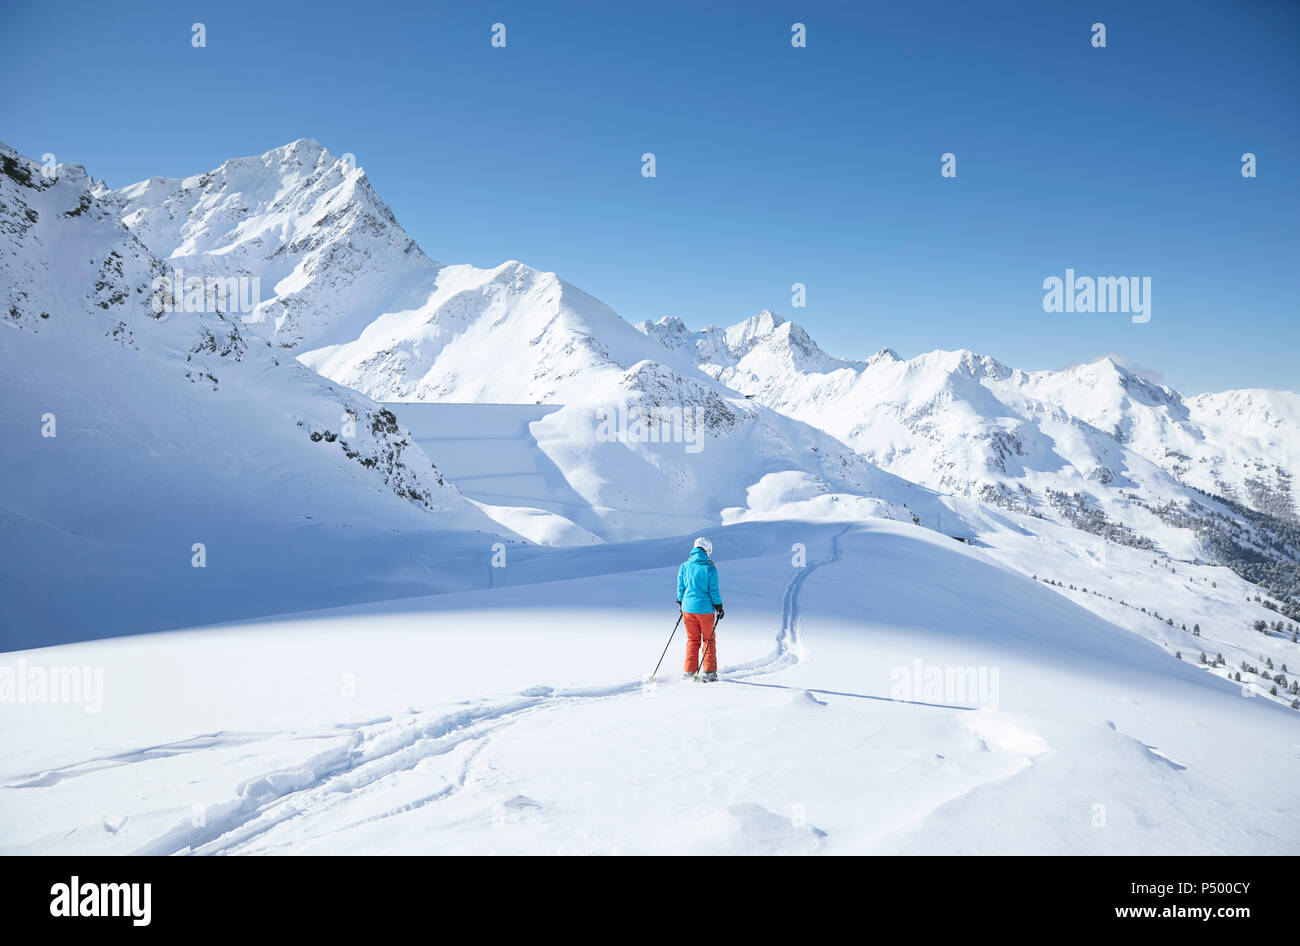 Austria, Tyrol, Kuehtai, female skier in winter landscape Stock Photo